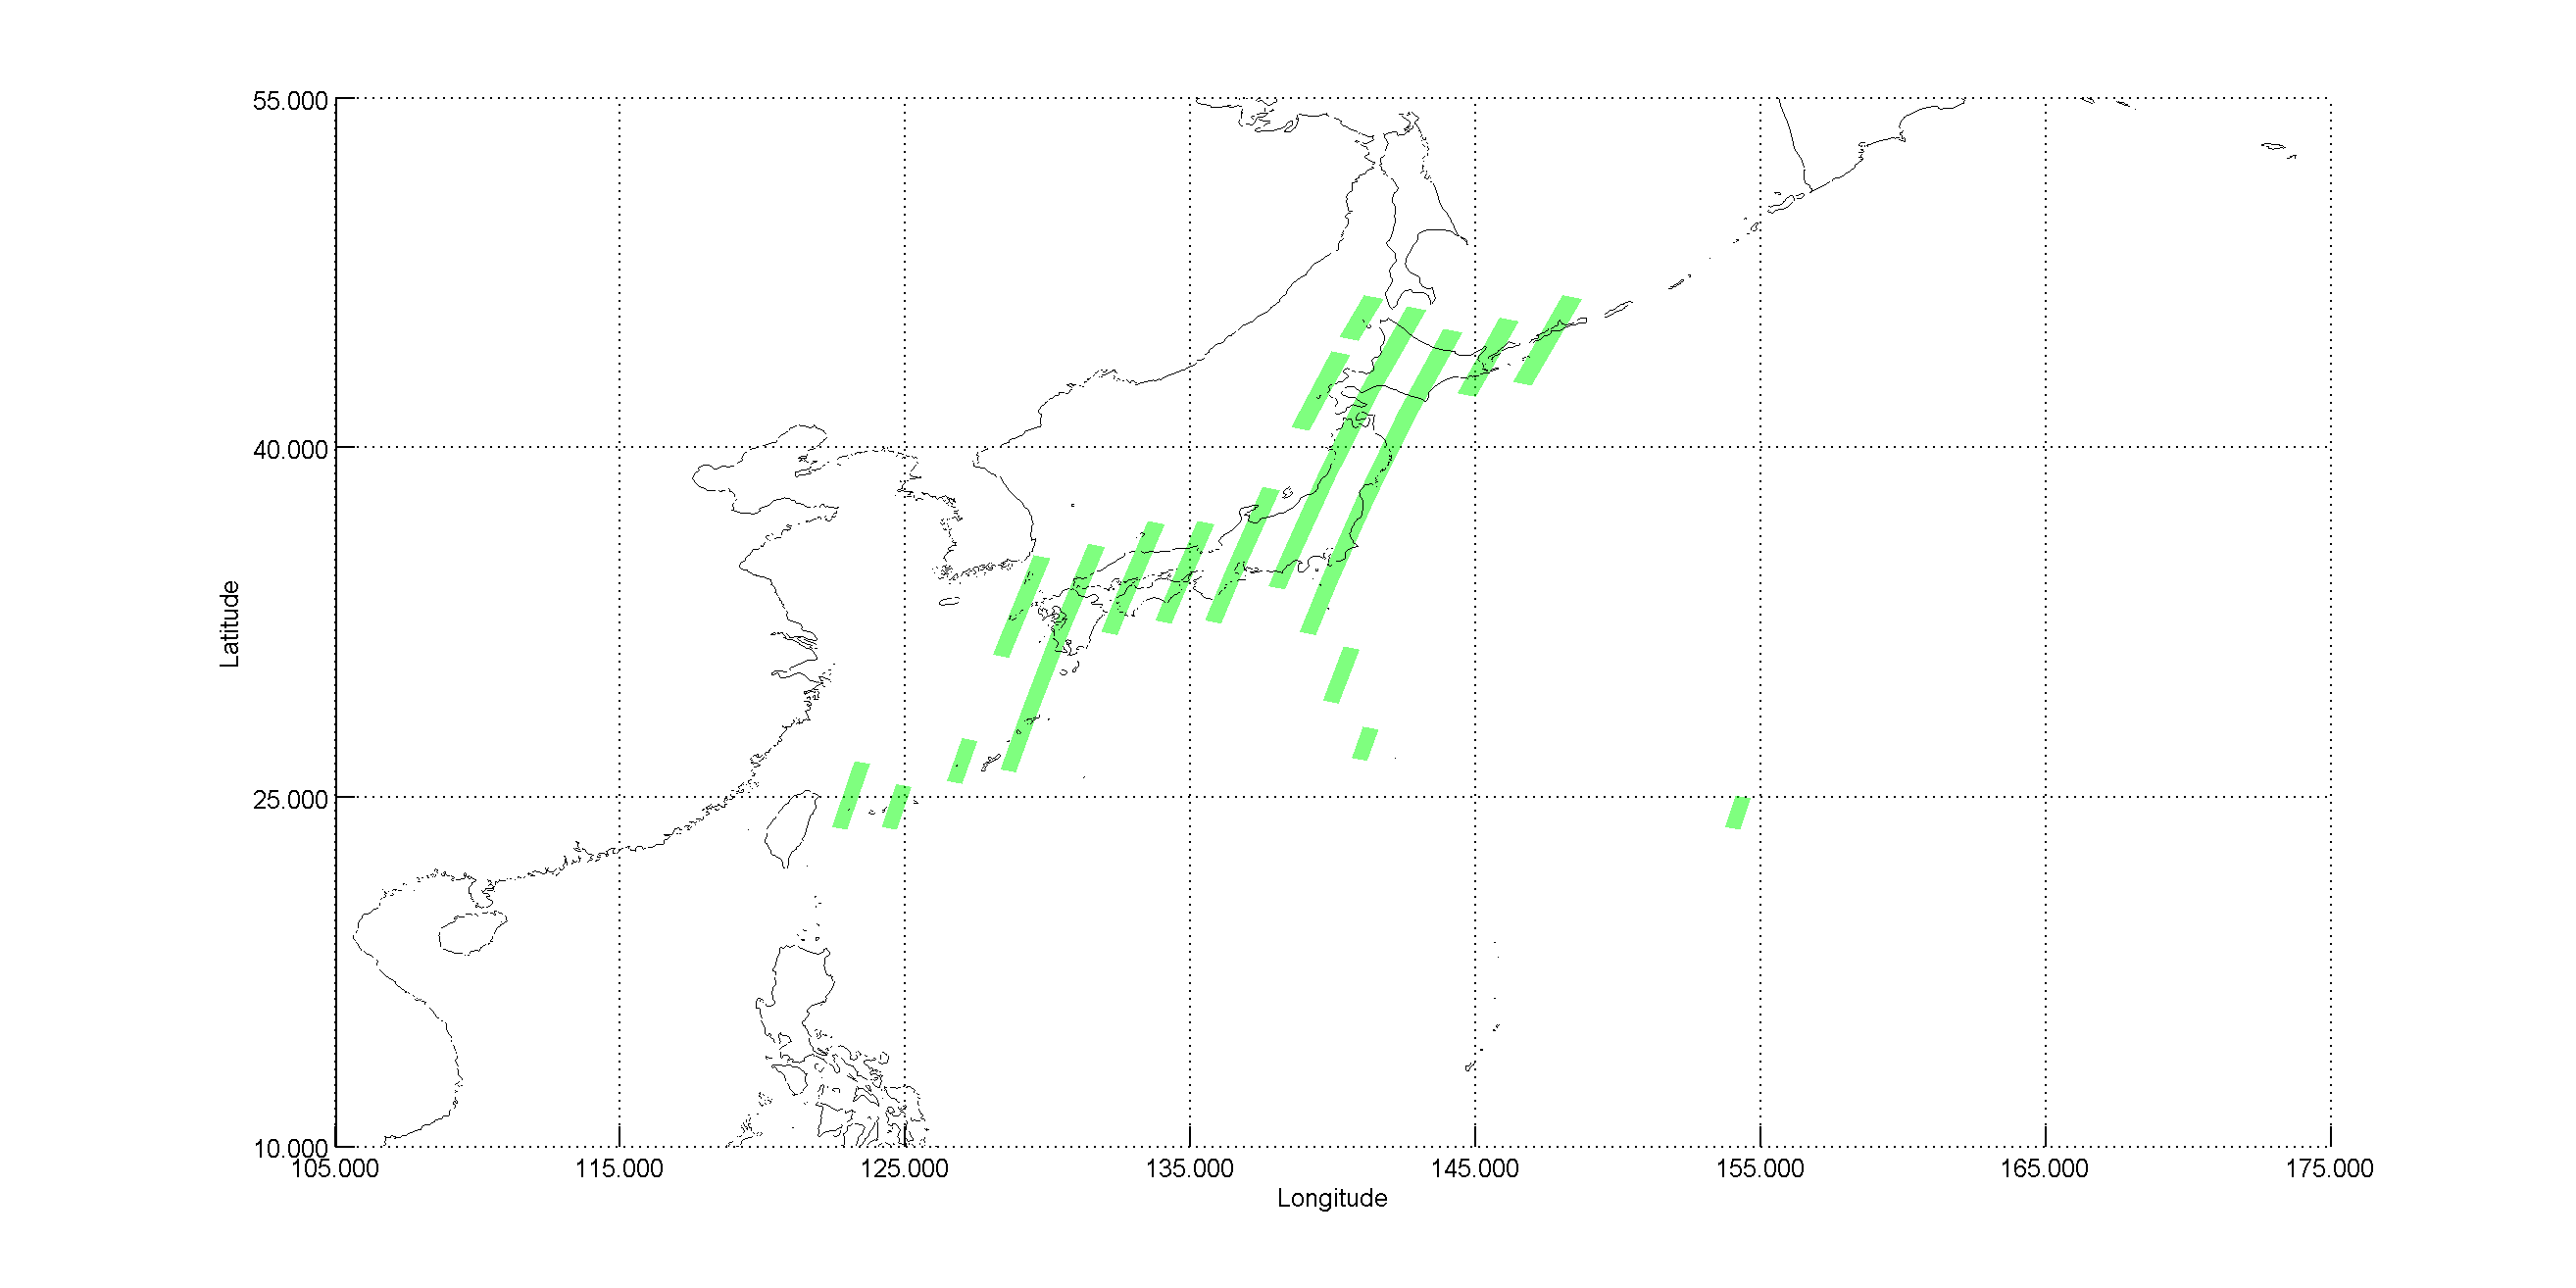 CYCLE_130 - Japan Descending passes